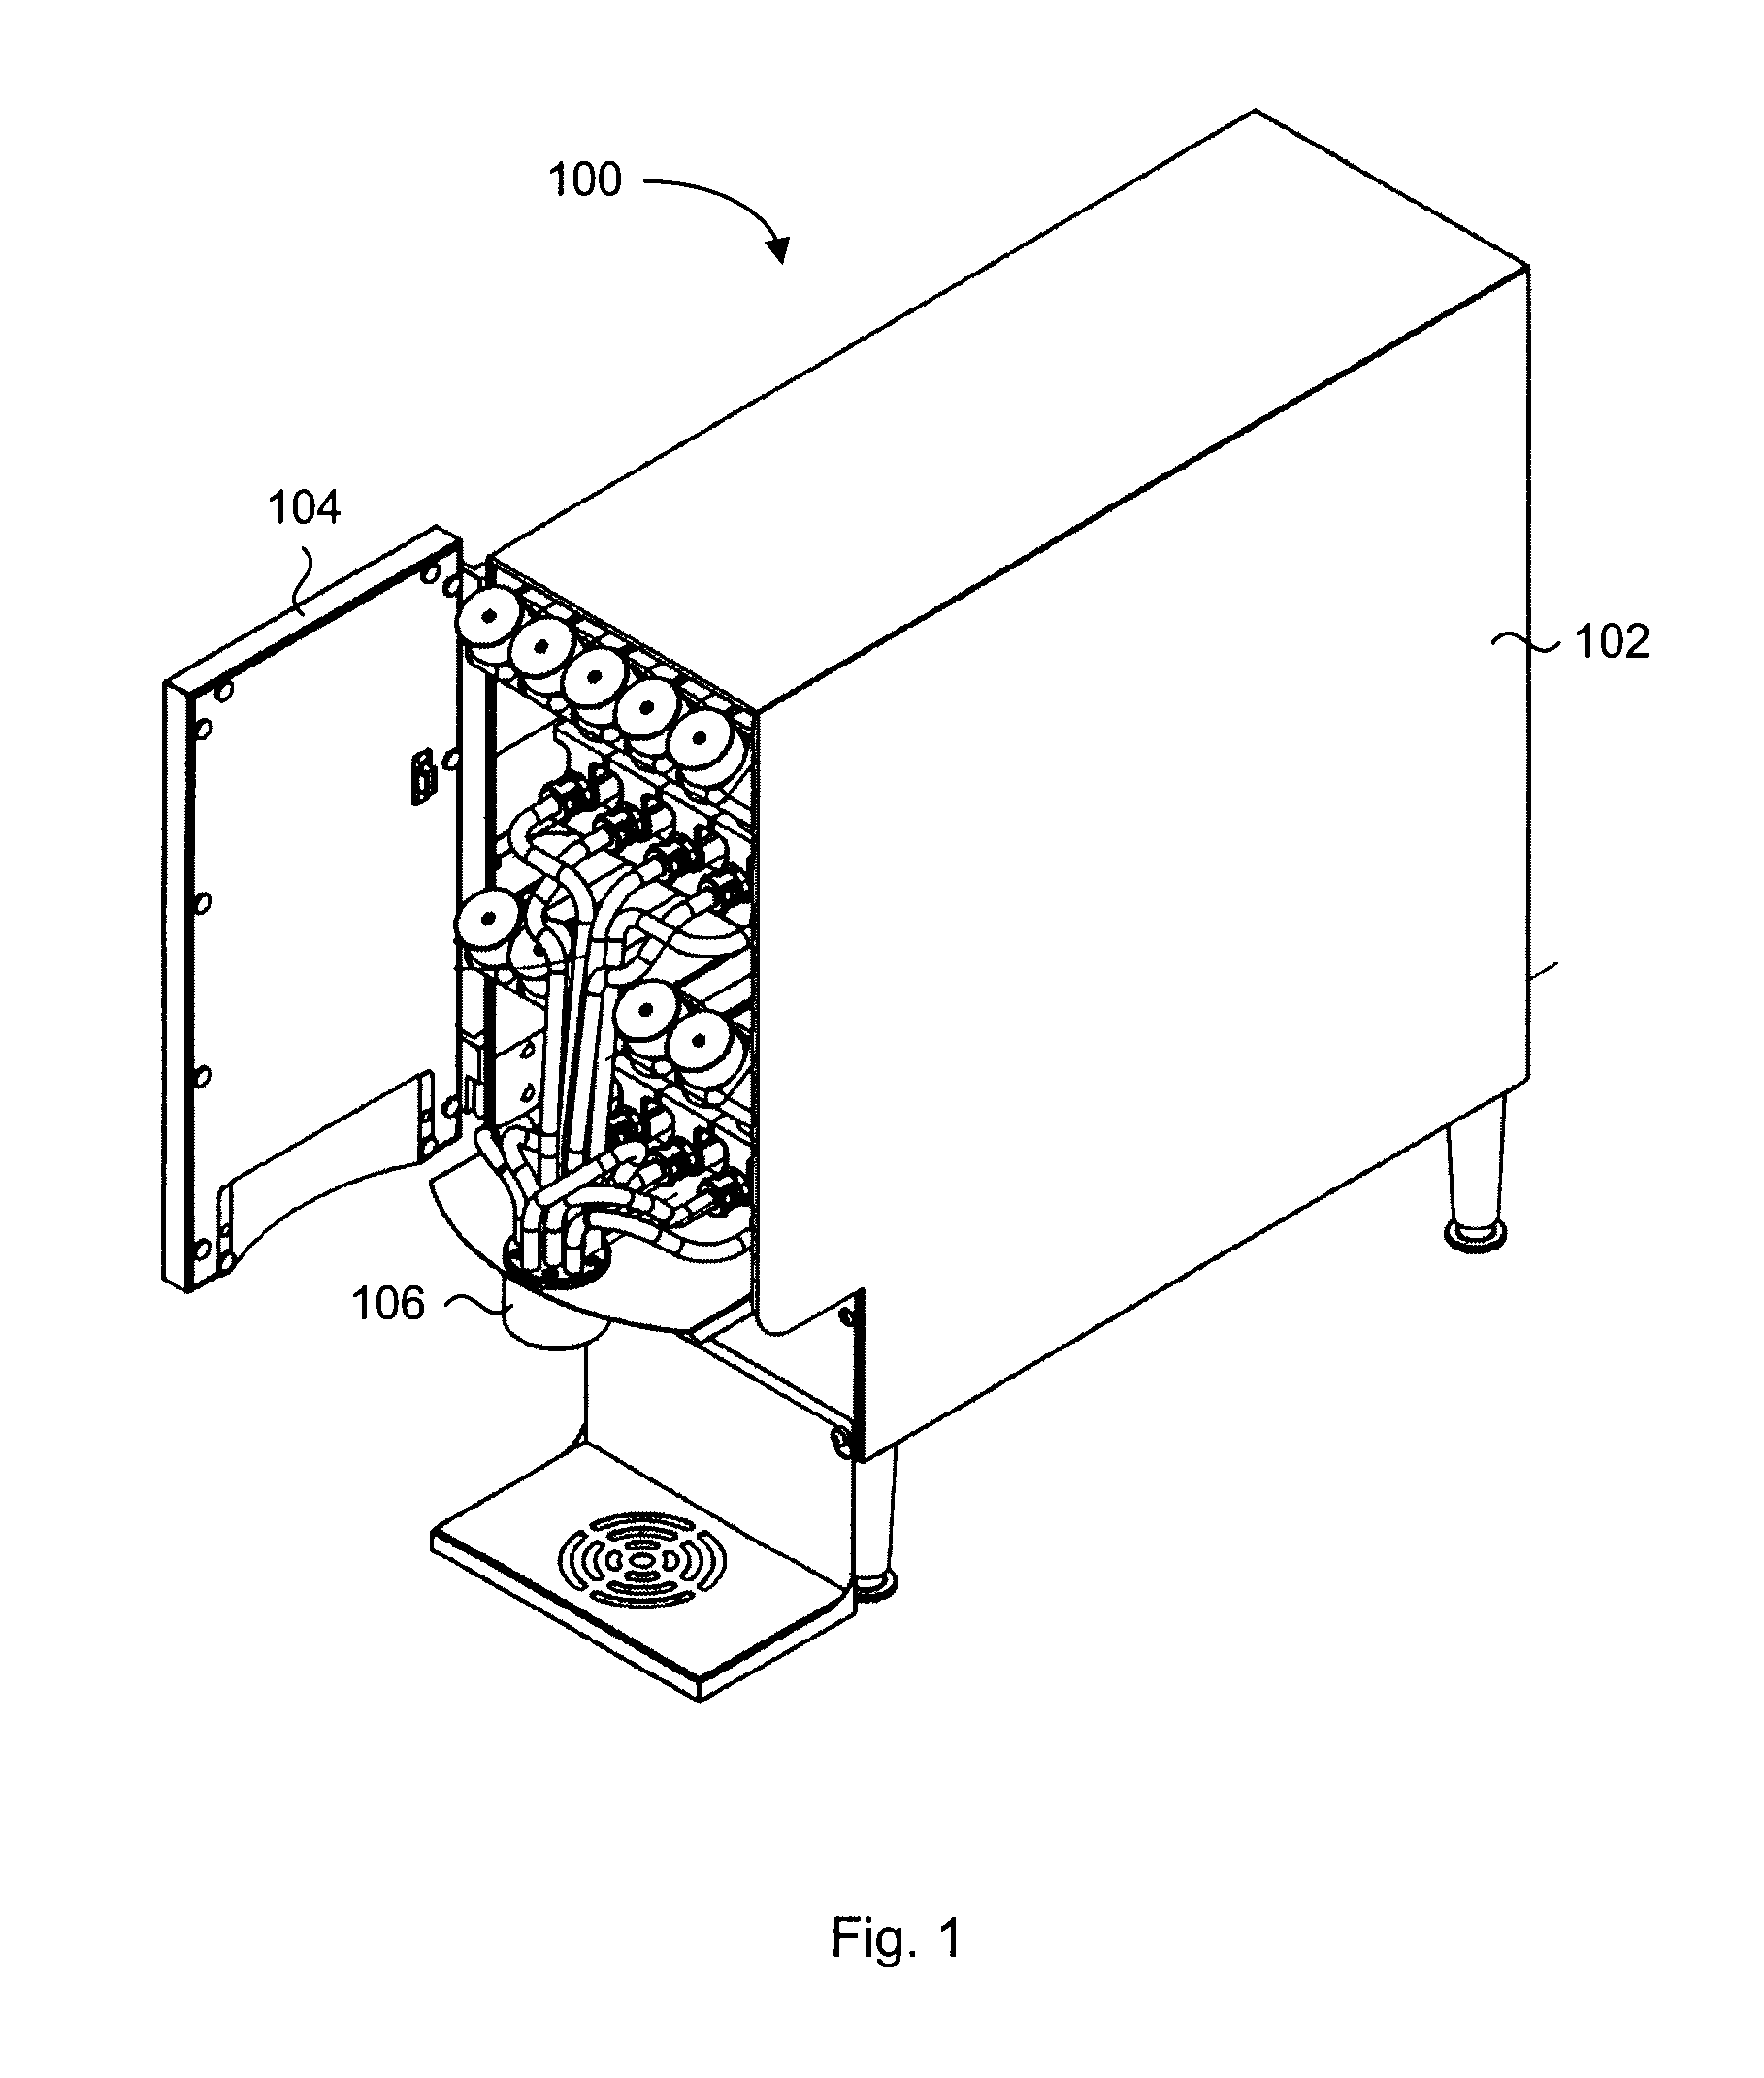 Cartridge based fluid dispensing apparatus